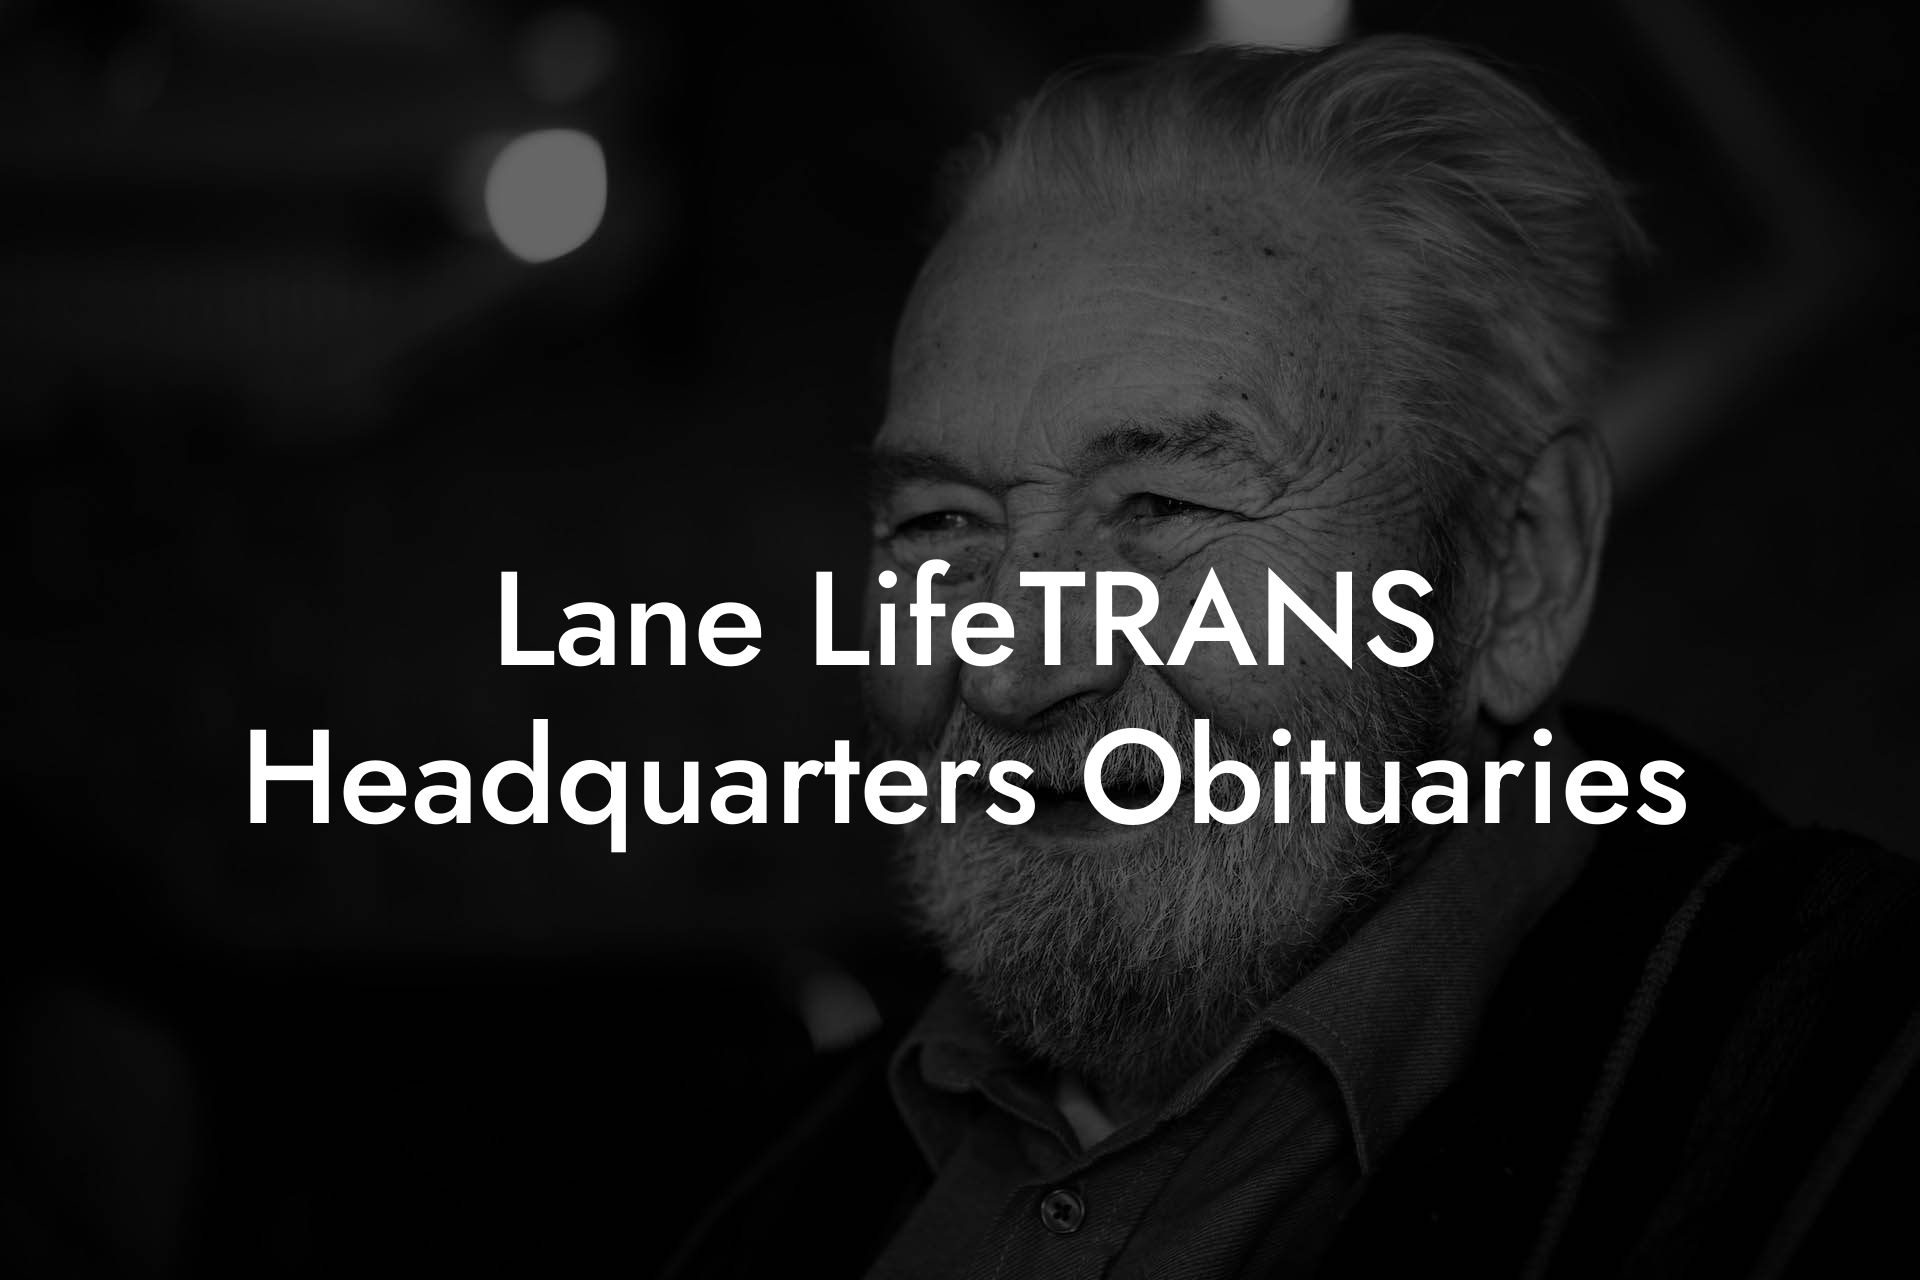 Lane LifeTRANS Headquarters Obituaries